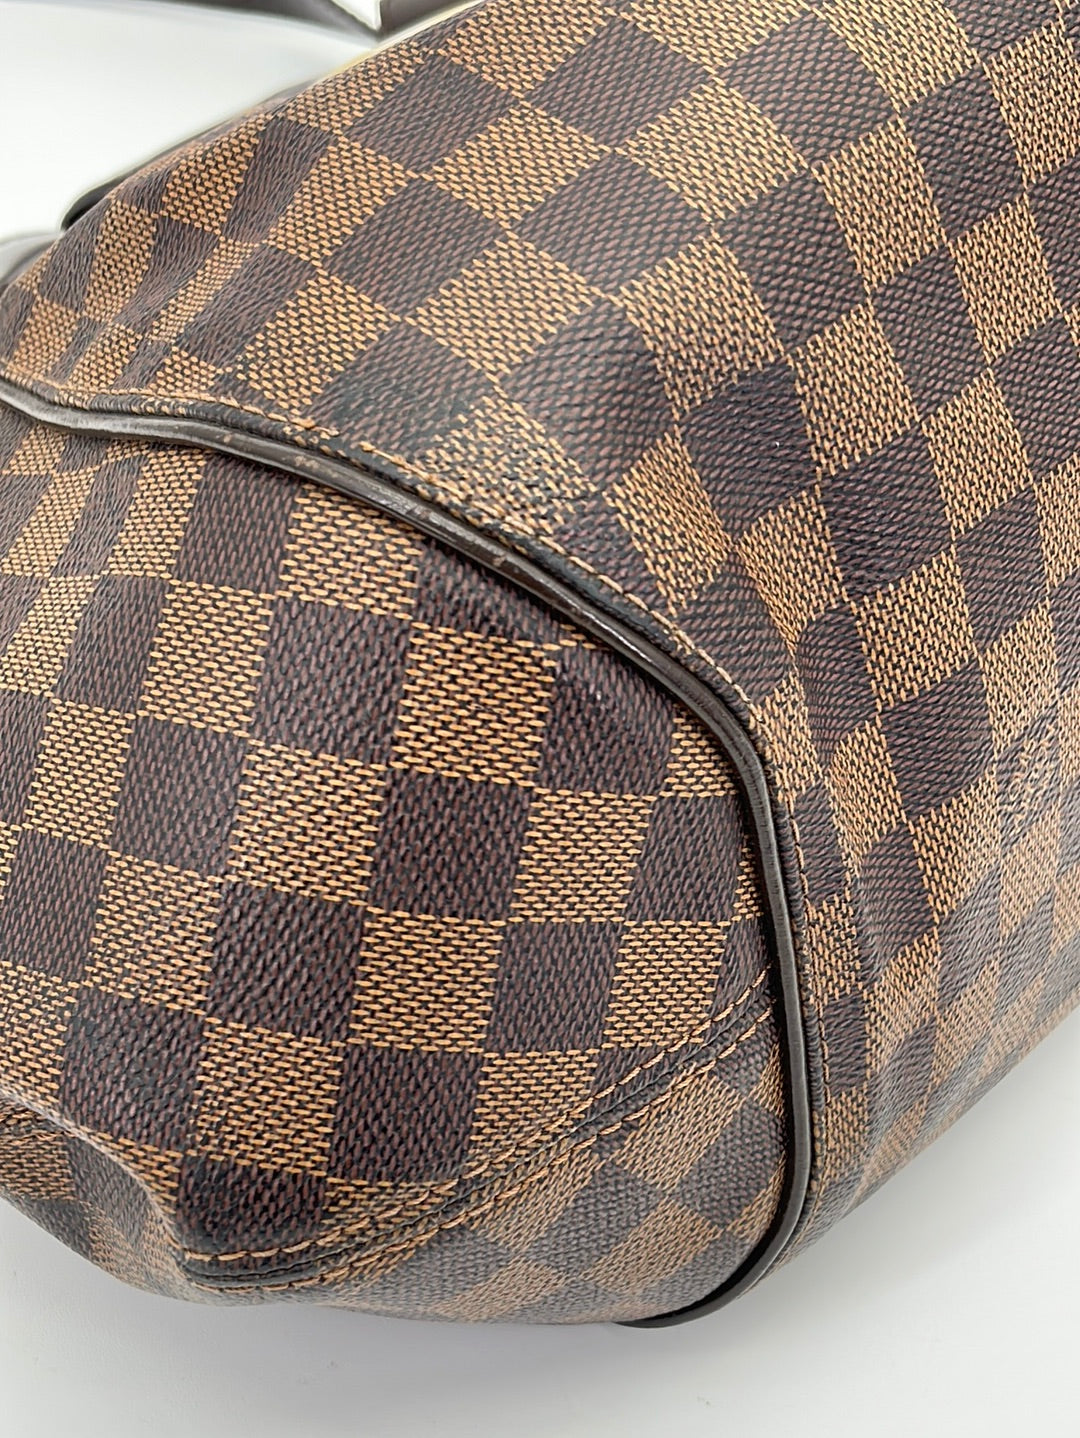 NTWRK - PRELOVED Louis Vuitton Sistina PM Damier Ebene Handbag FL3059 06